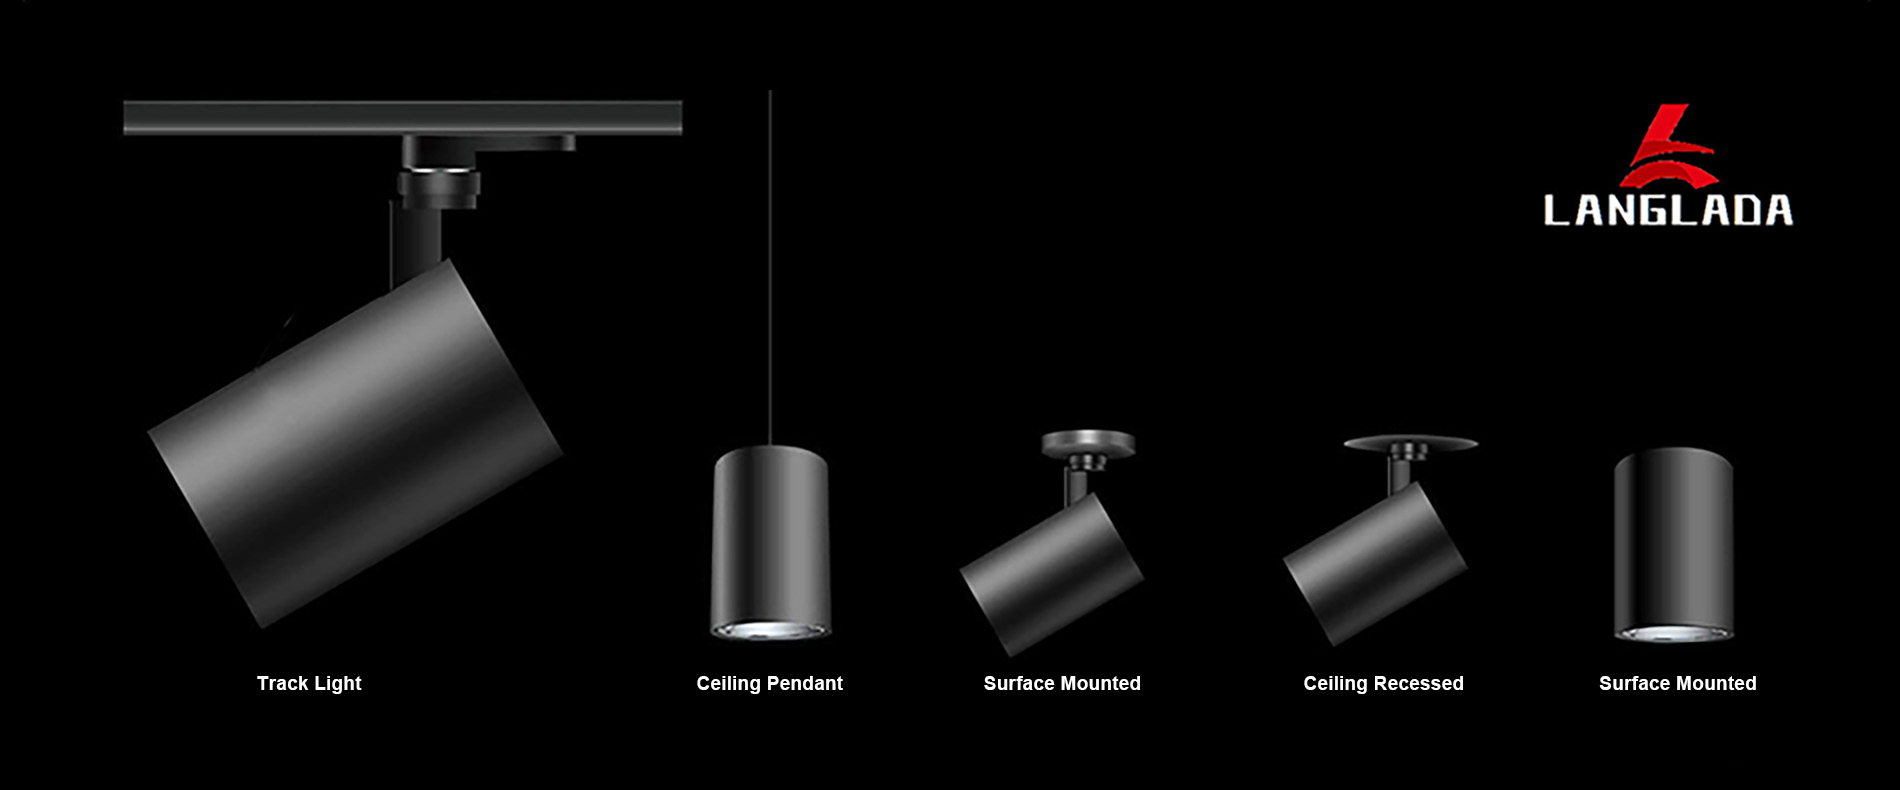 Langlada LED products